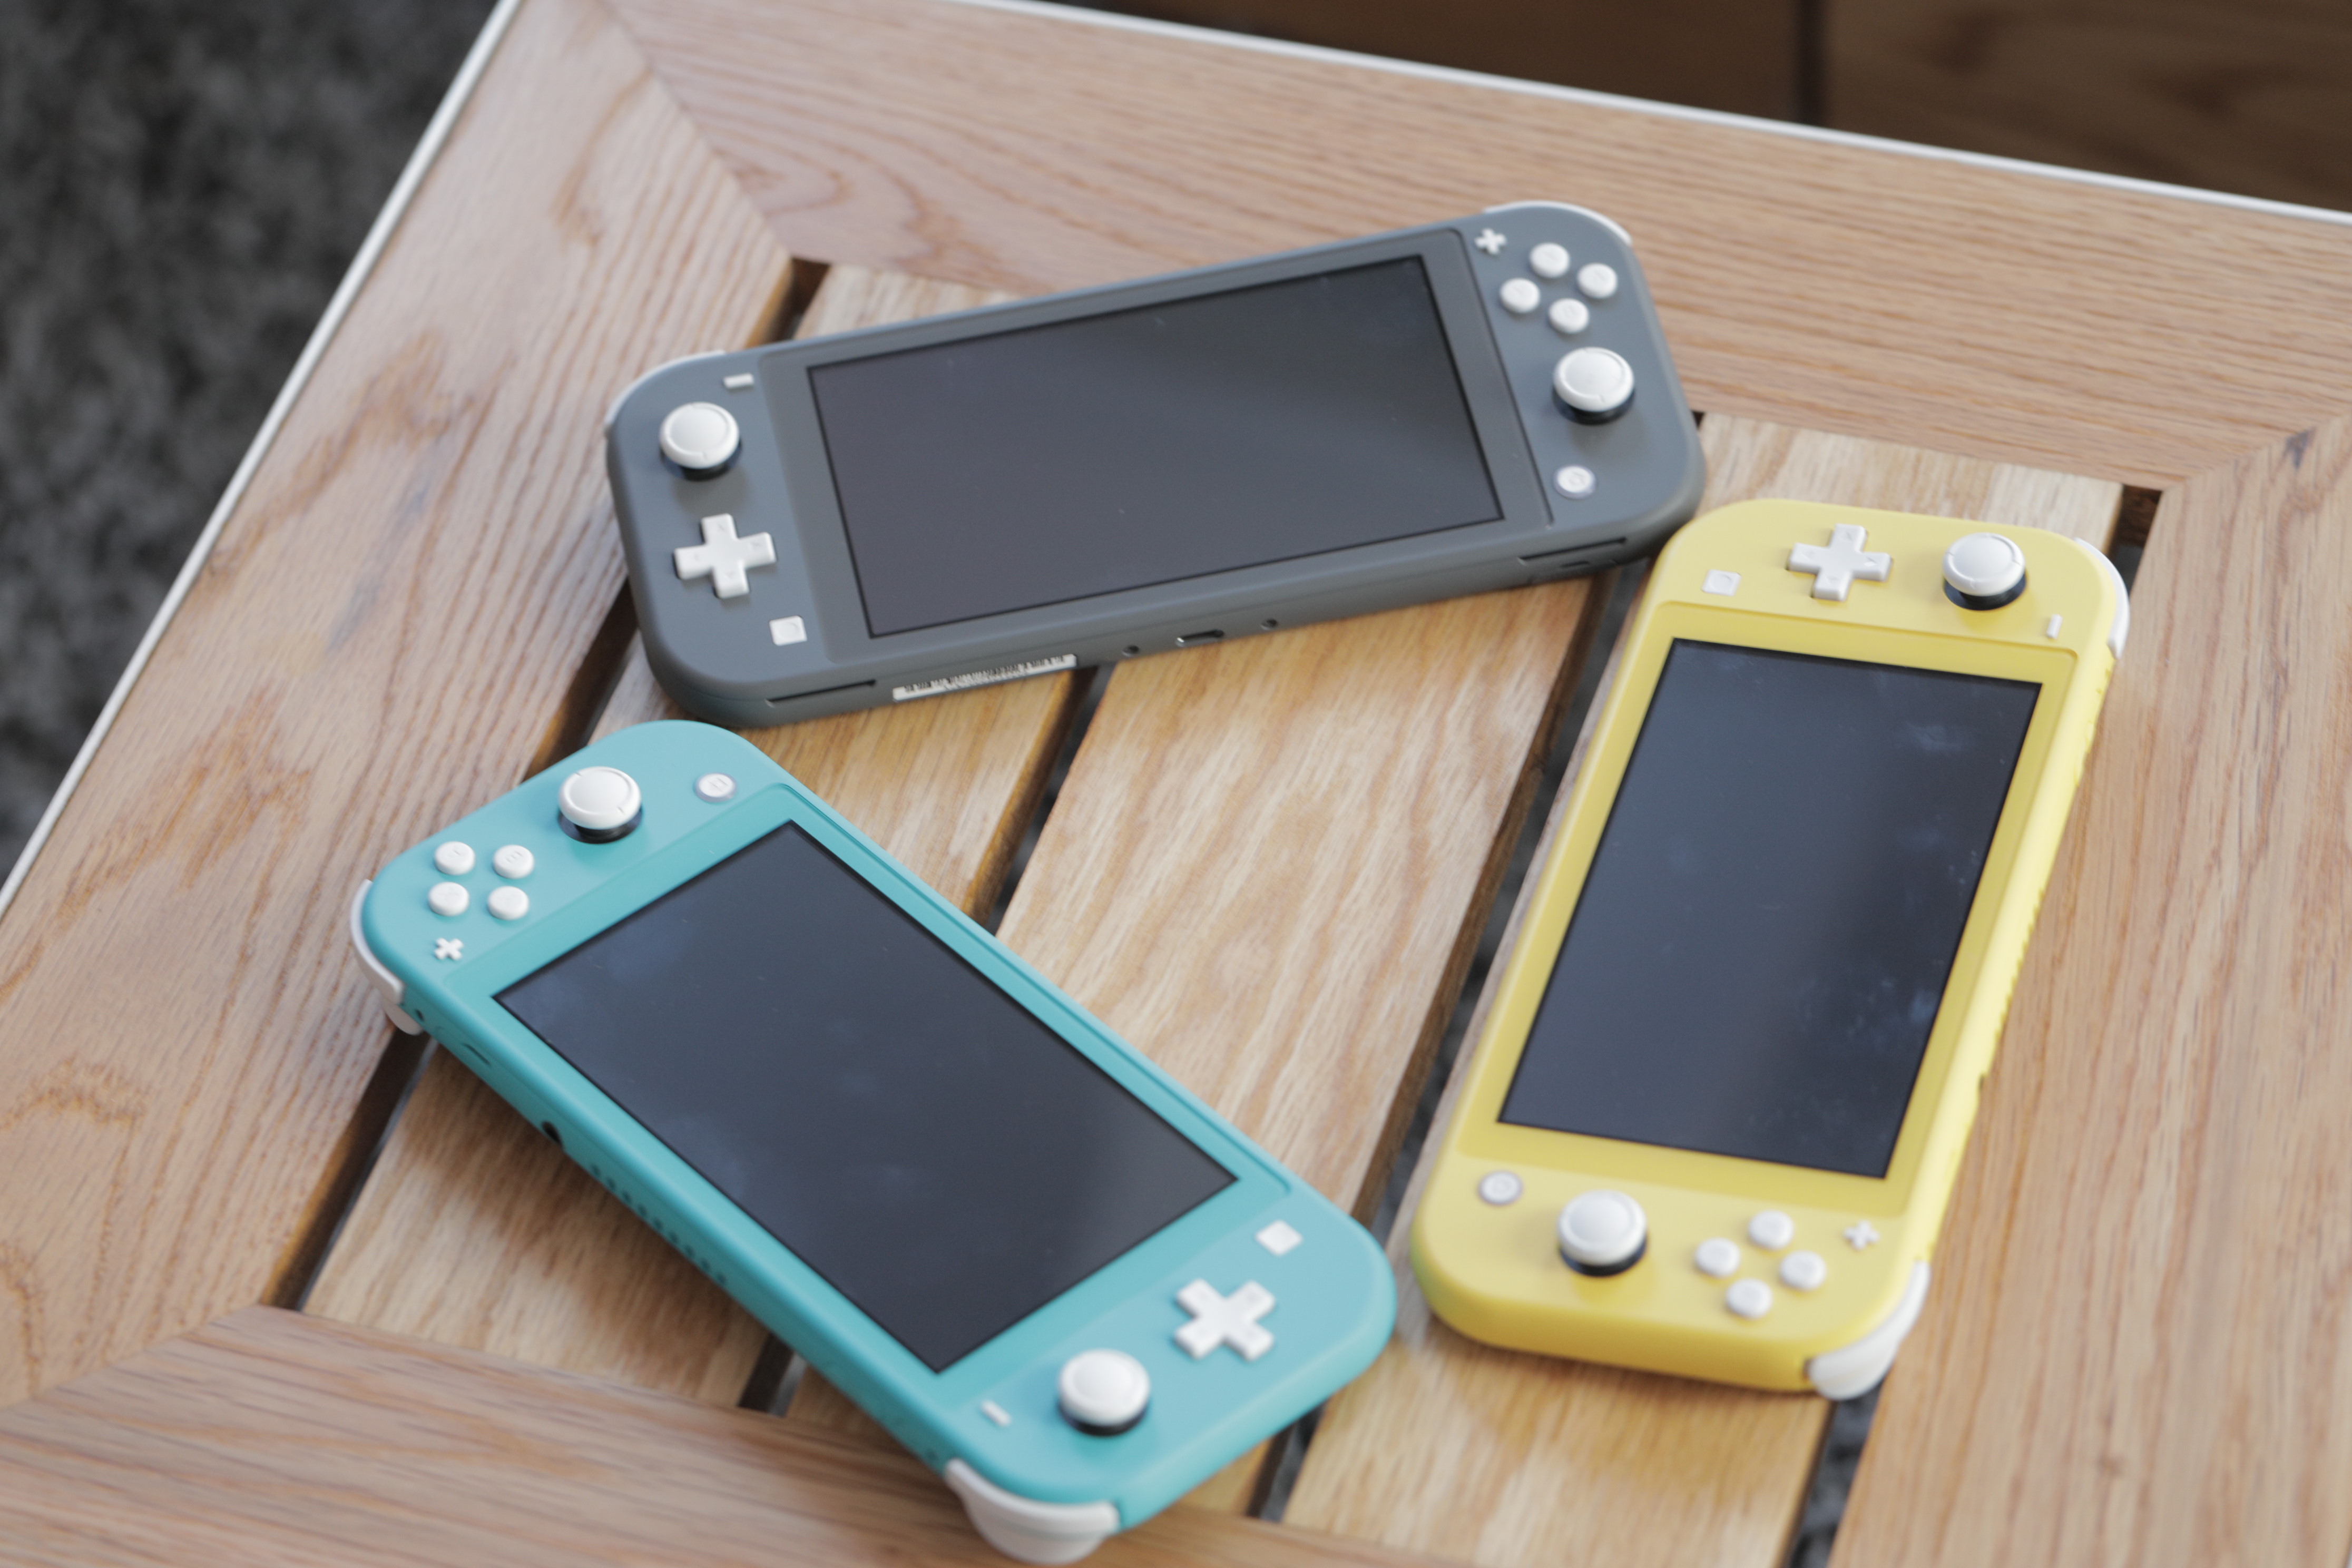 Reggie Fils-Aimé discusses his journey with Nintendo – TechCrunch